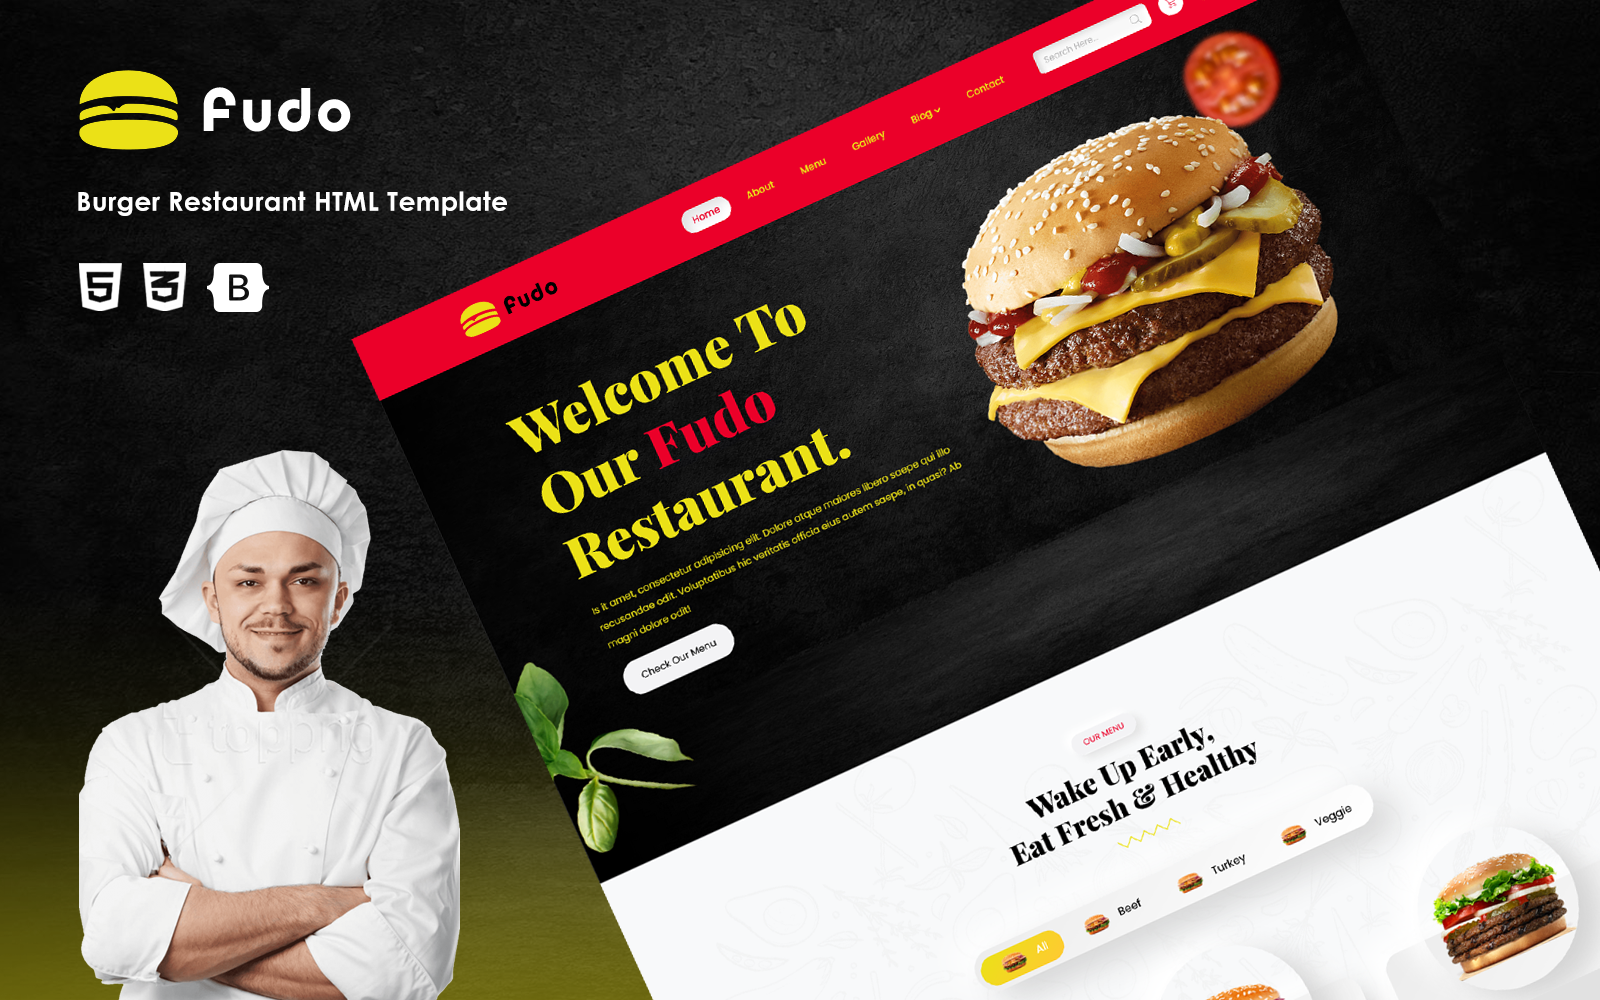 Fudo - Burger Restaurant HTML Template